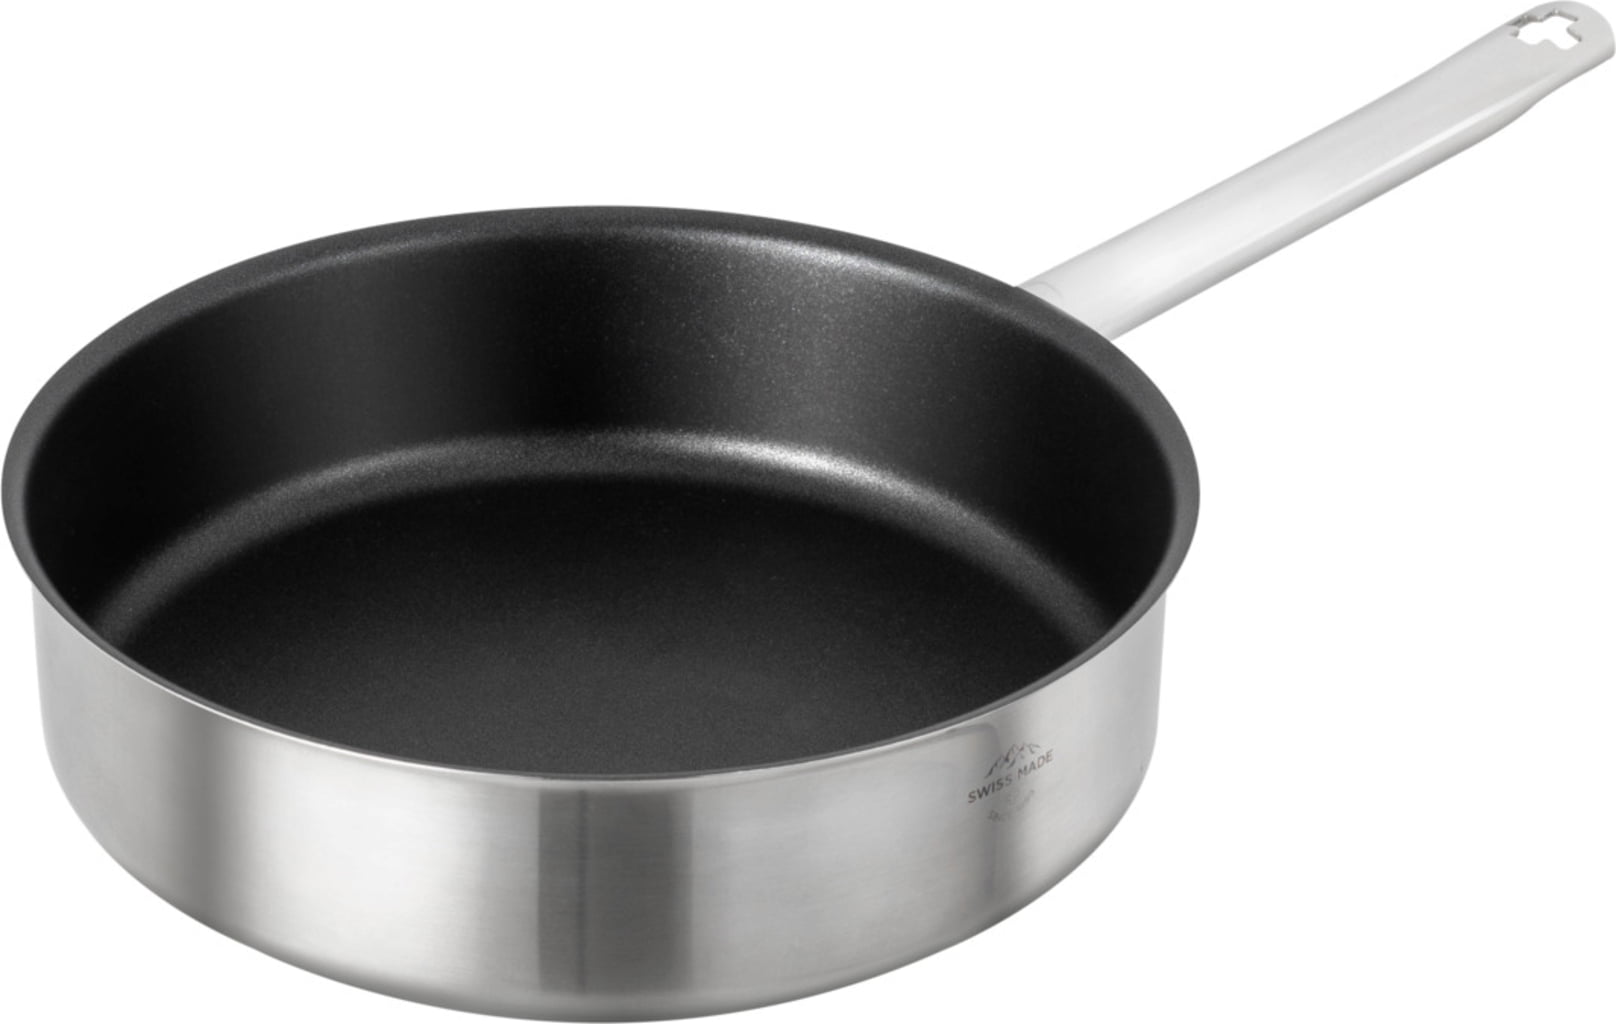 Kuhn Rikon MONTREUX Non-Stick Frying Pan, High - Interismo Online